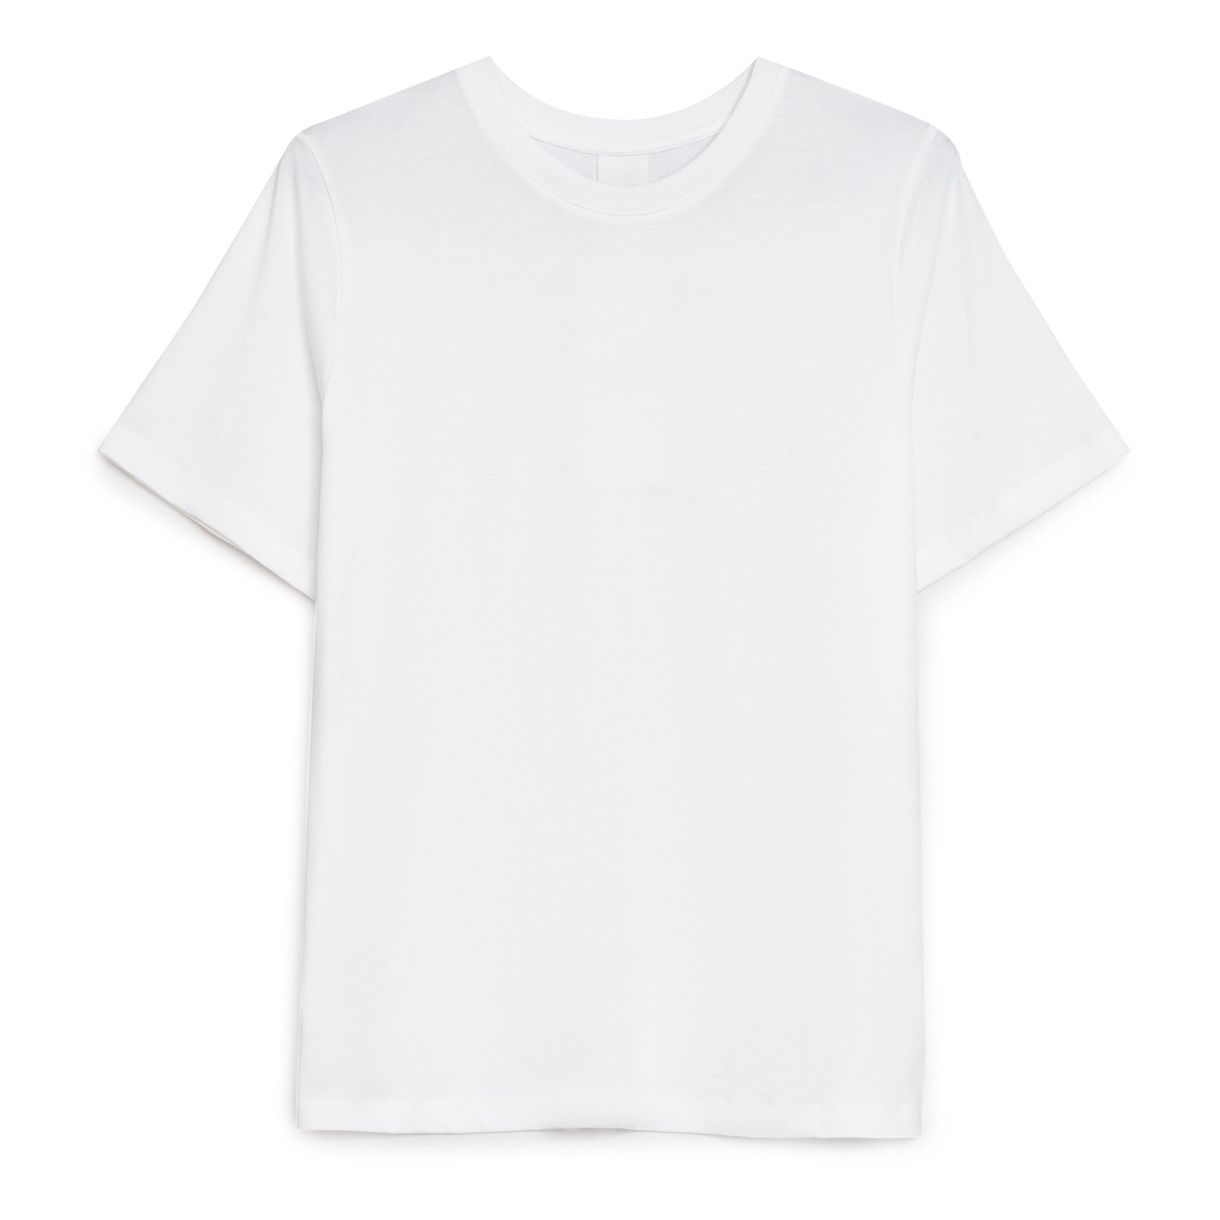 Kowtow - T-shirt Classic Coton Bio - Femme - Blanc